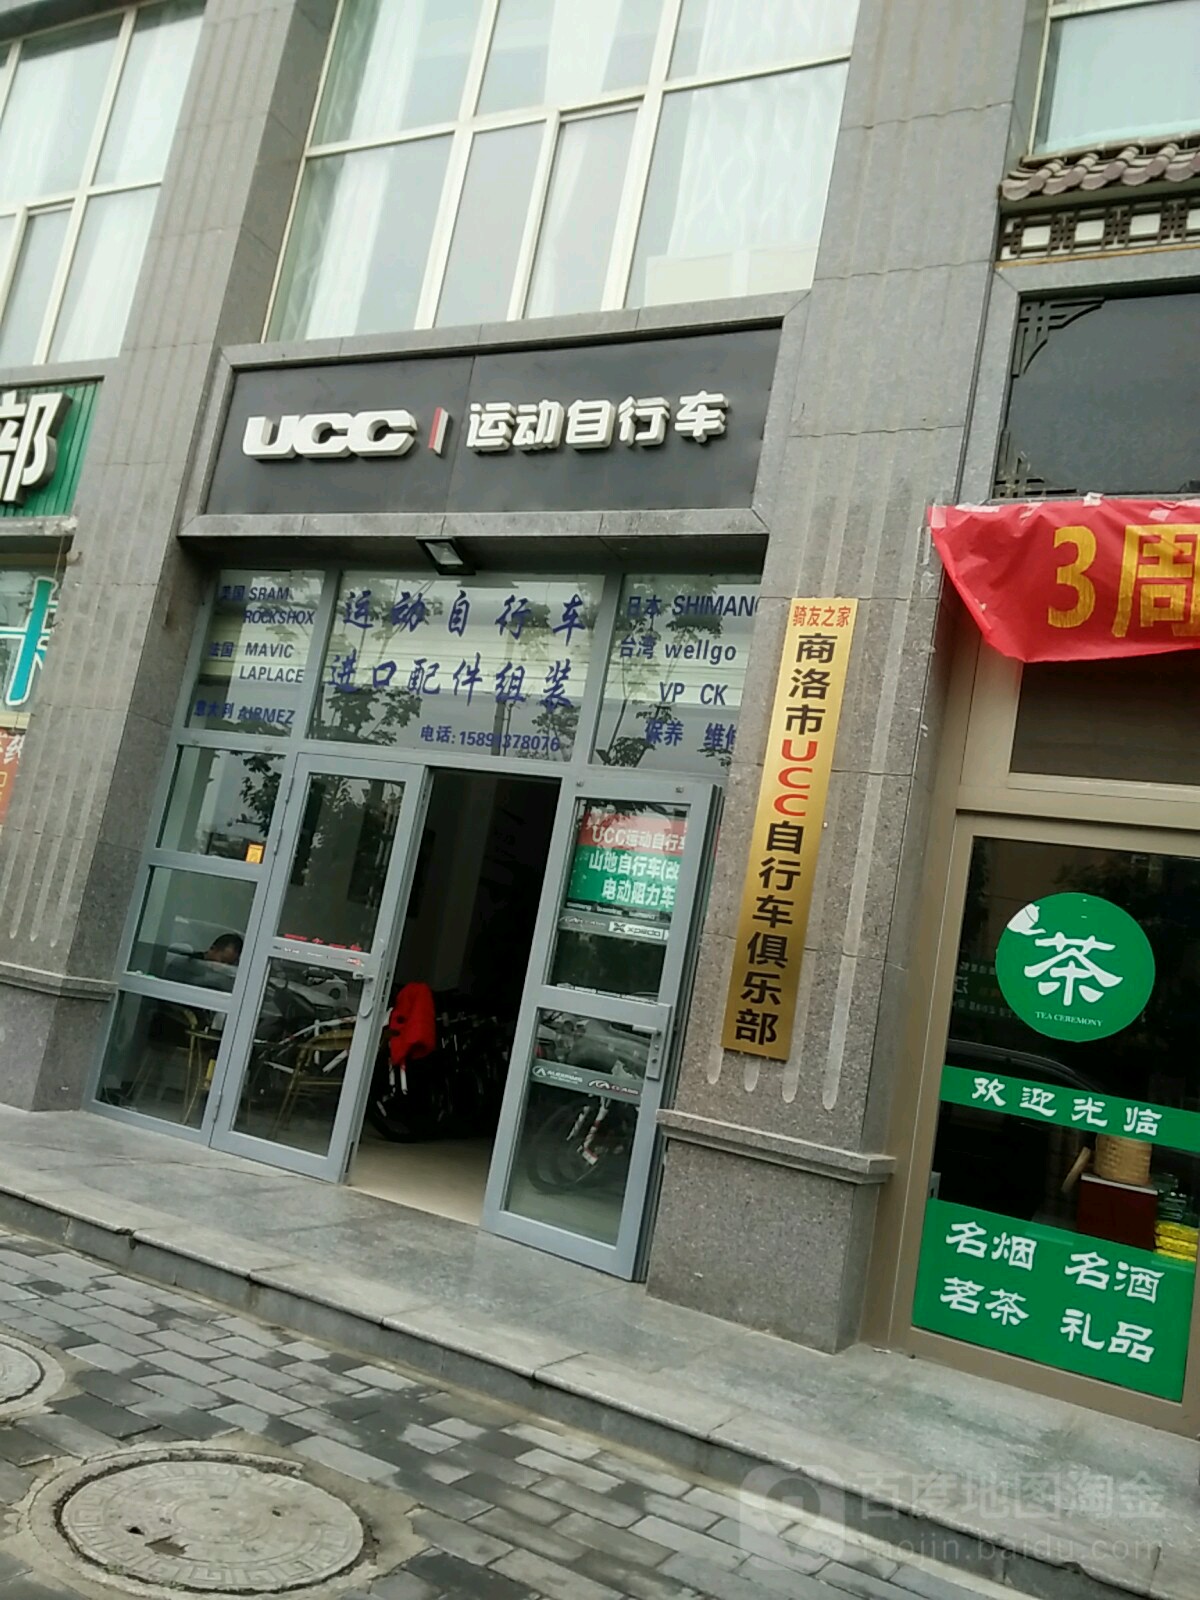 ucc运动自行车(东环路店)